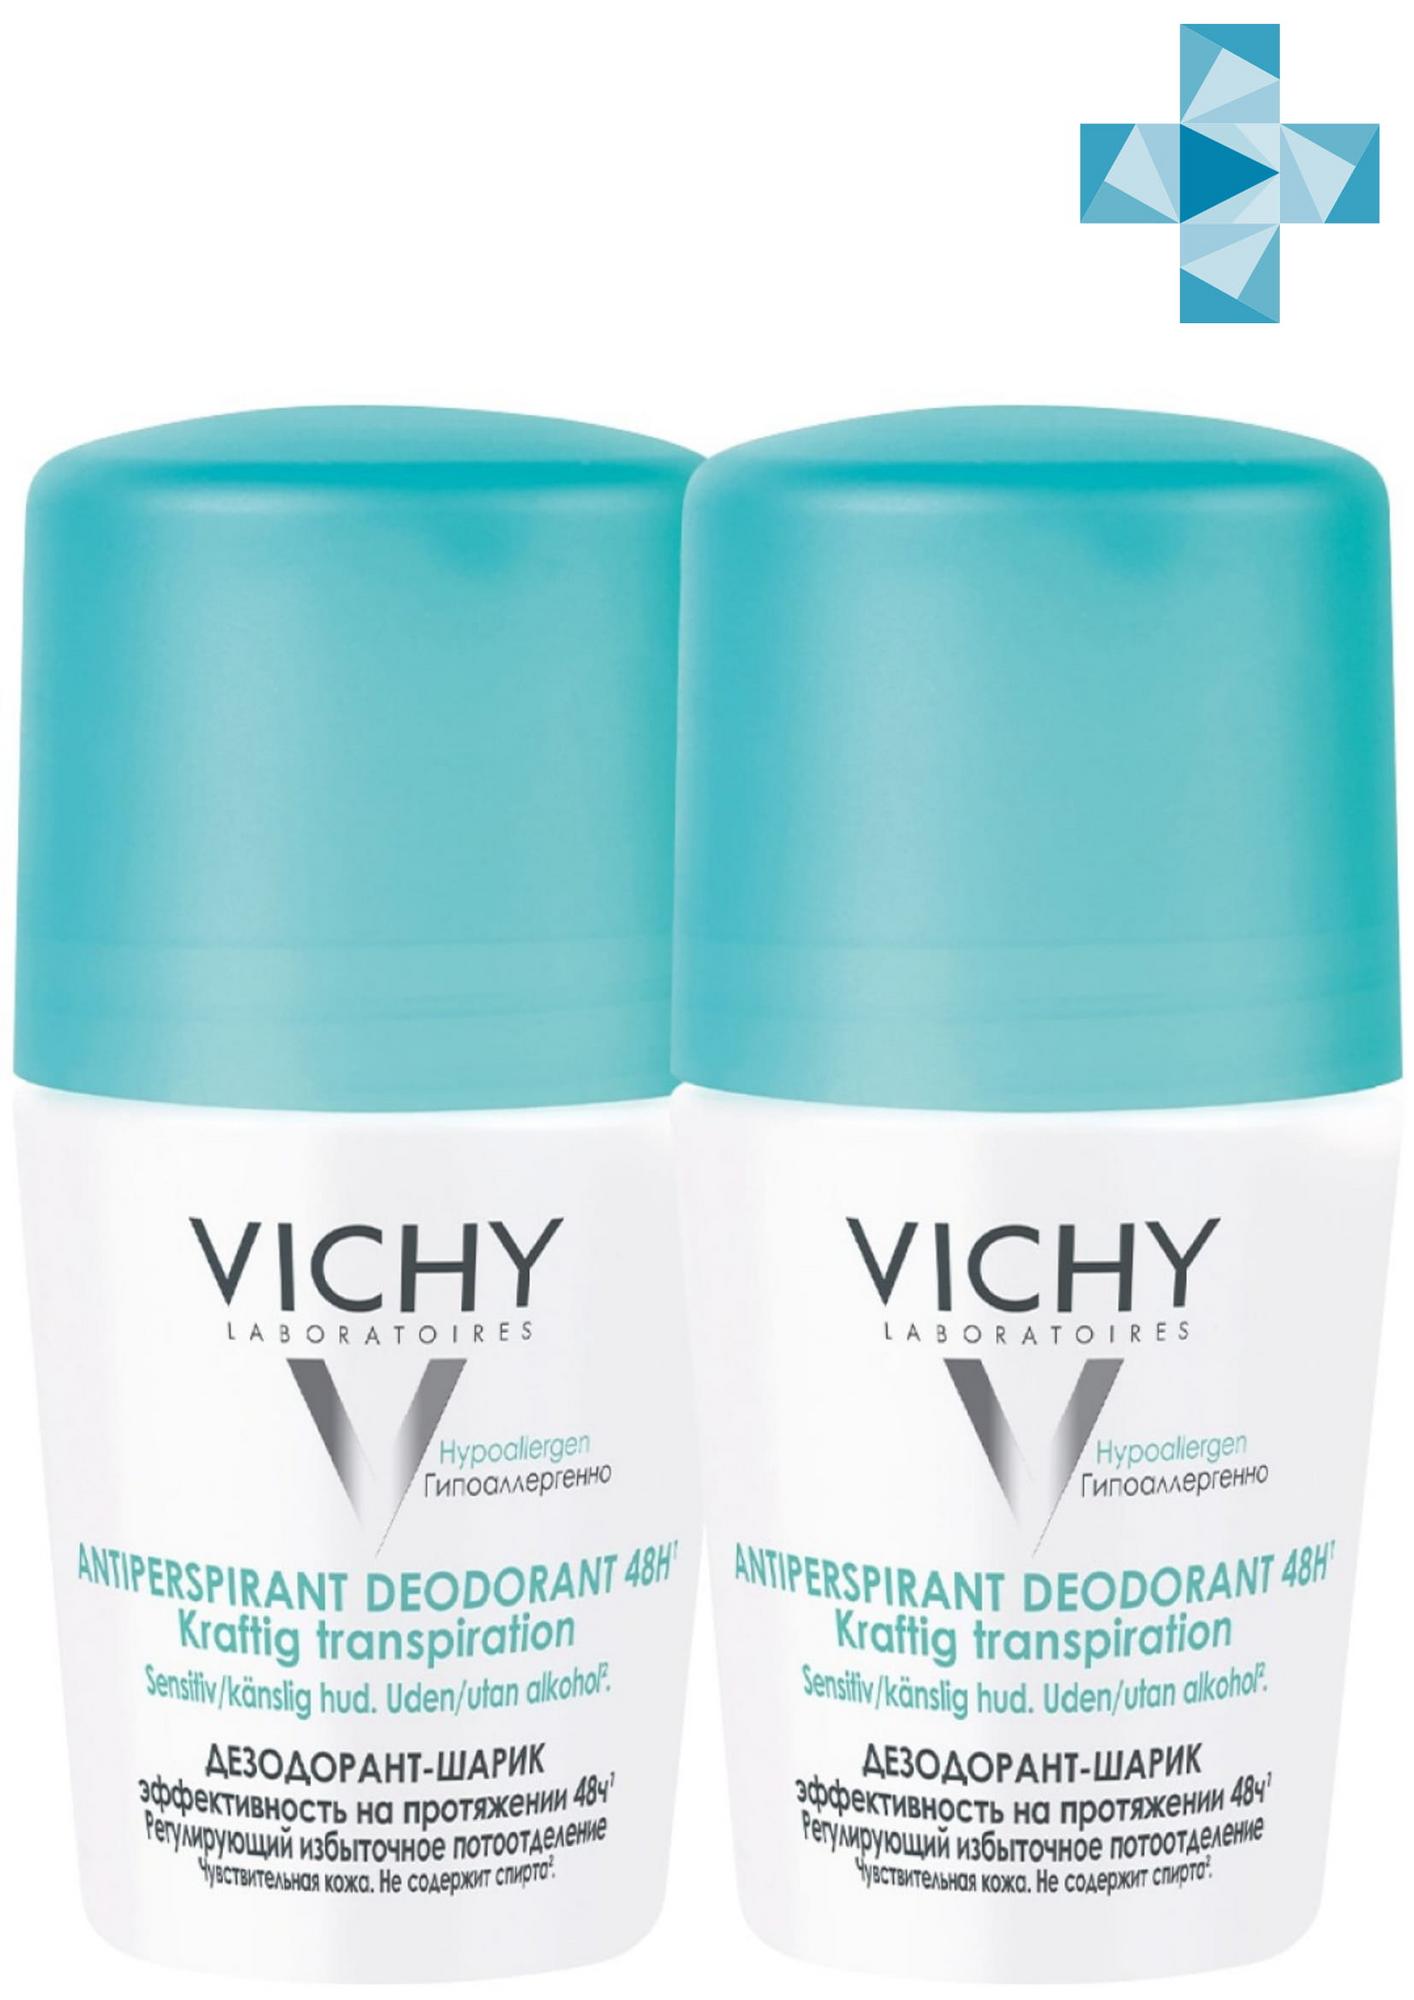 Vichy Комплект Дезодорант- шарик, регулирующий избыточное по